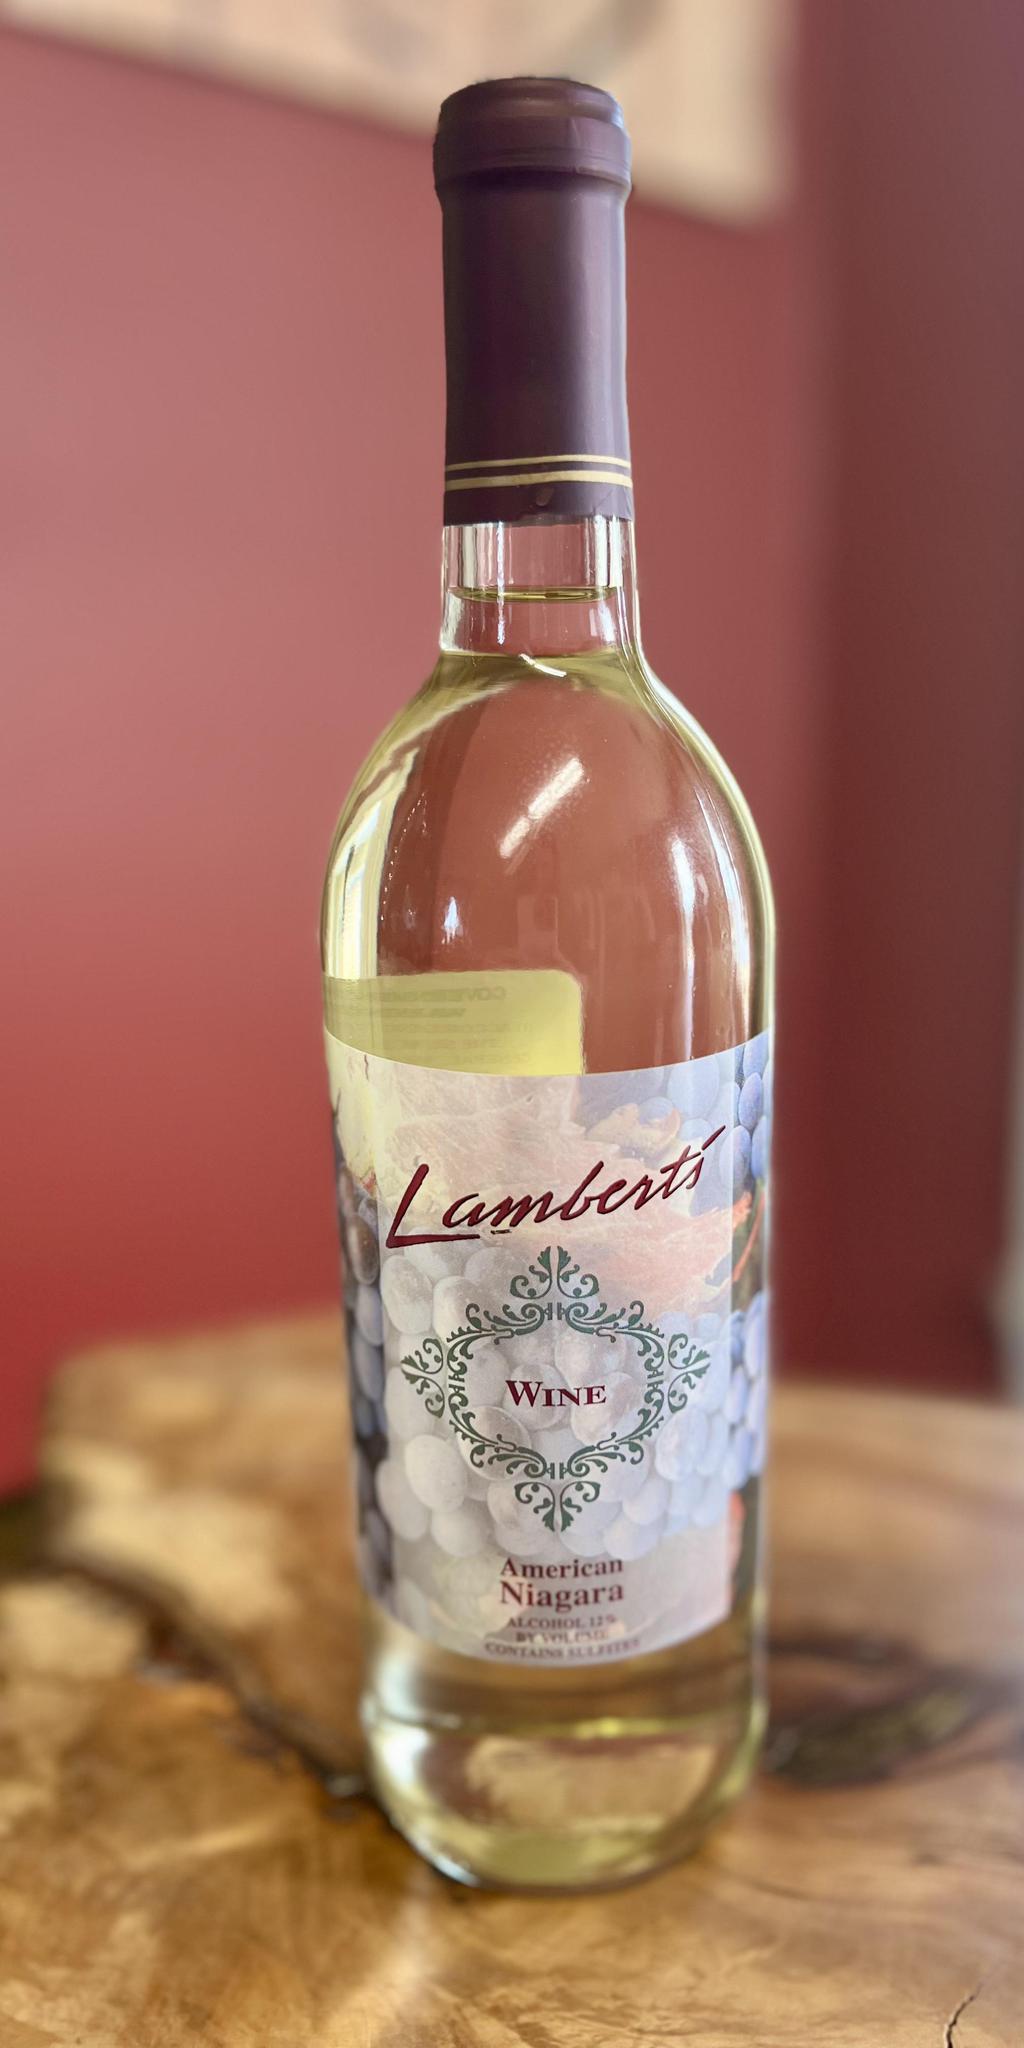 Lambert's Wine (American Niagara)